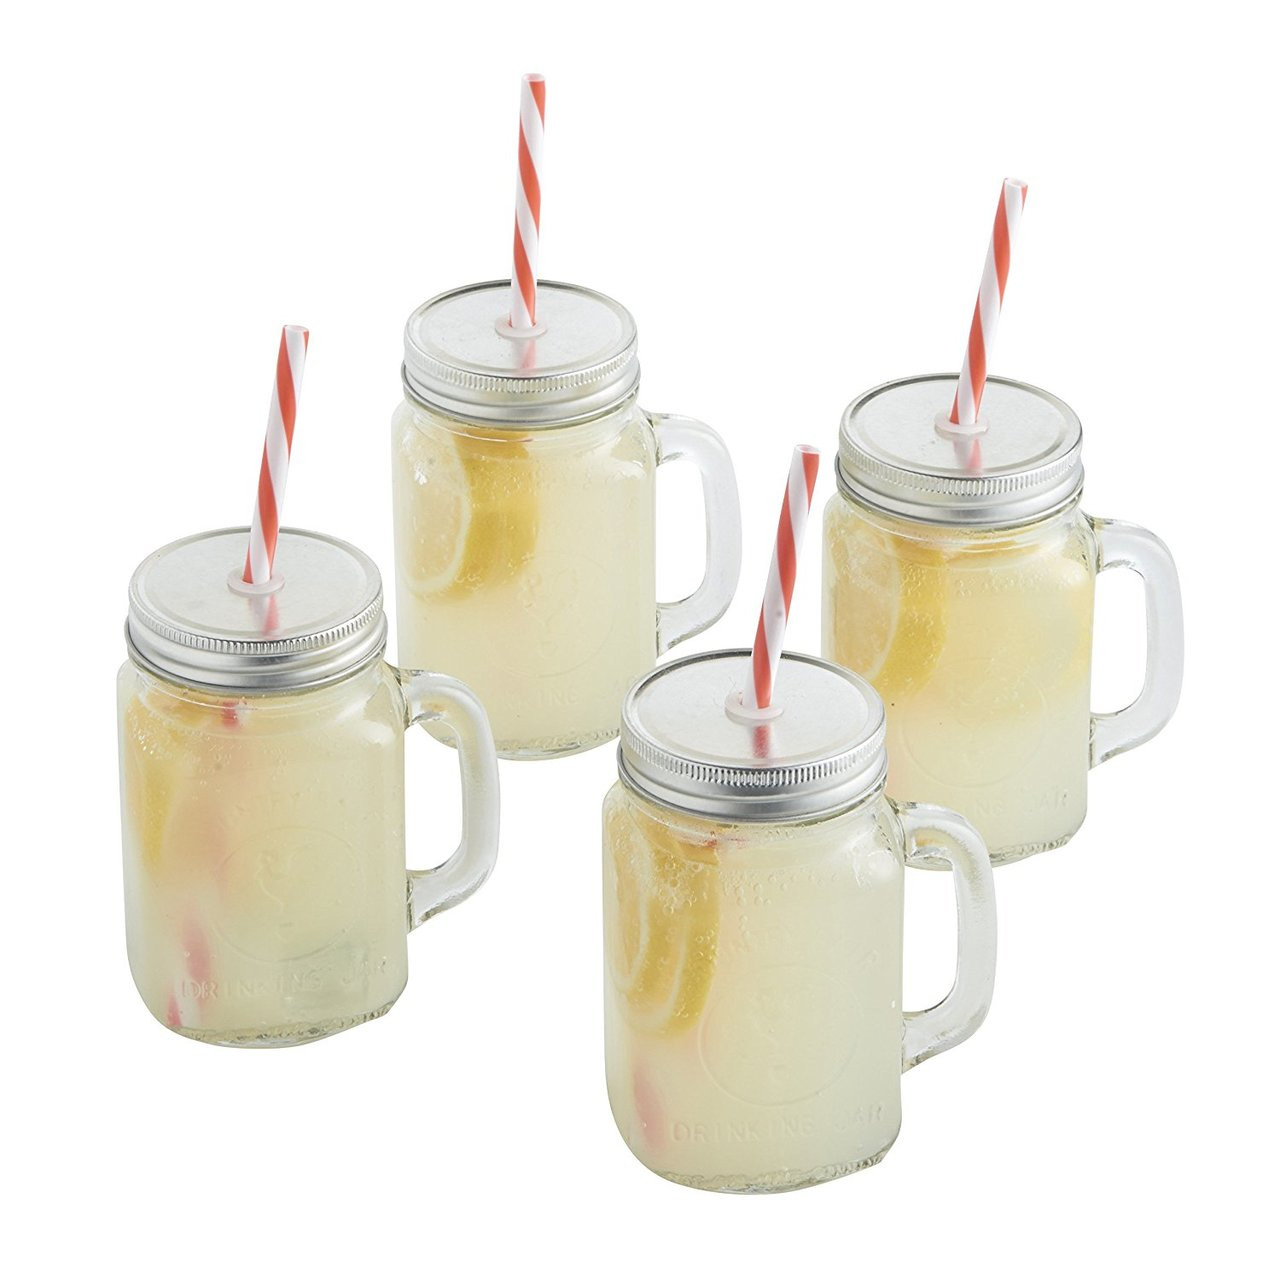 16oz square mason glass jar mug with handle and straw for Juice